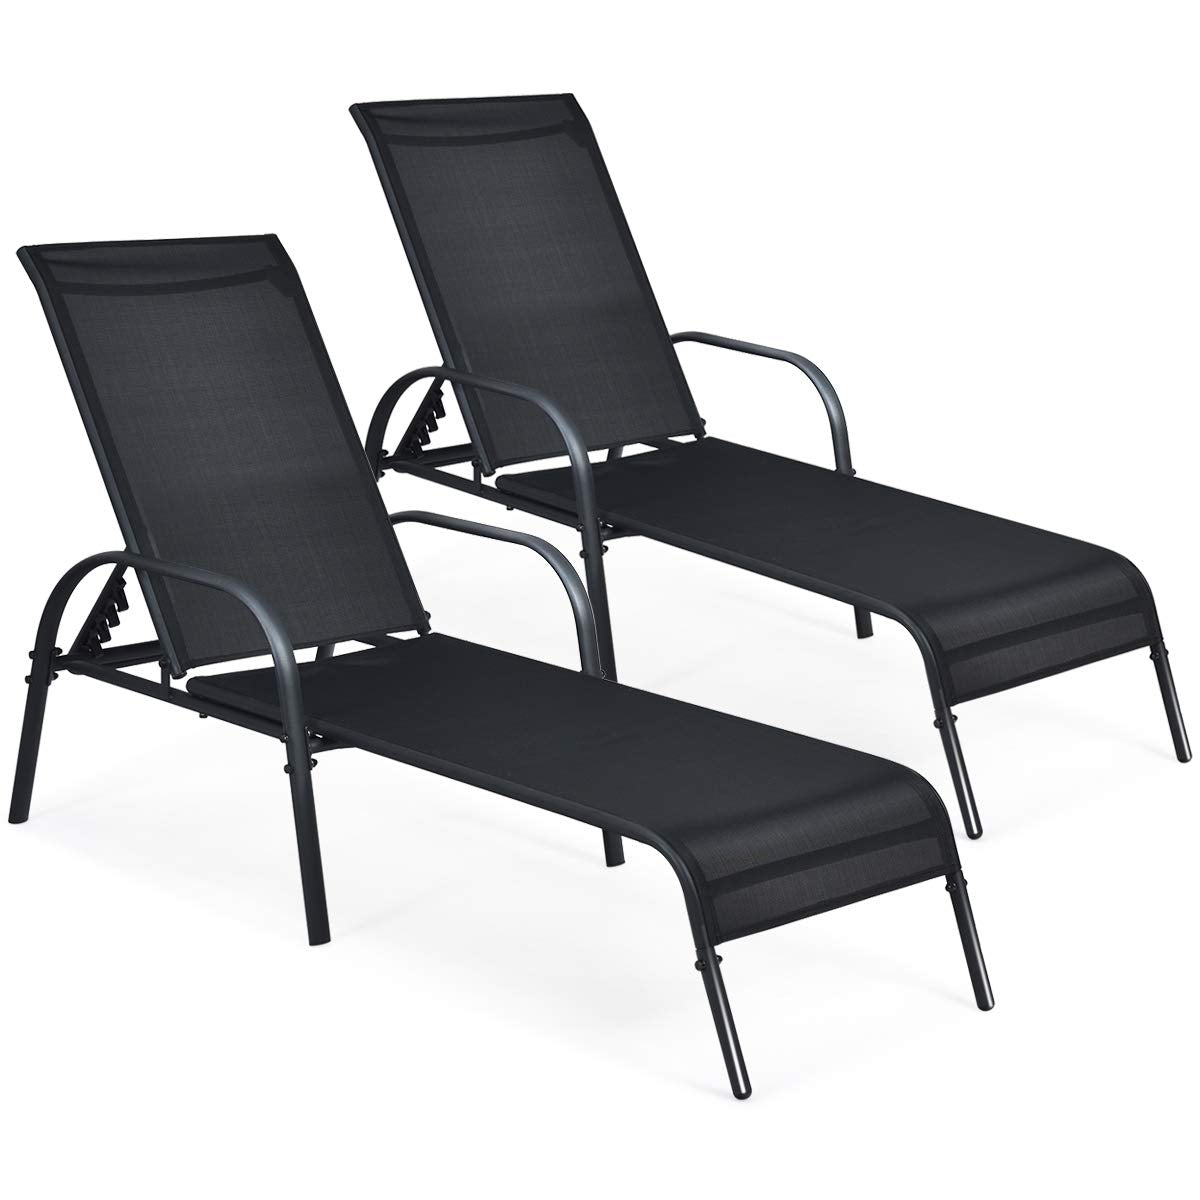 Giantex 2 Pcs Outdoor Chaise Lounge Chair